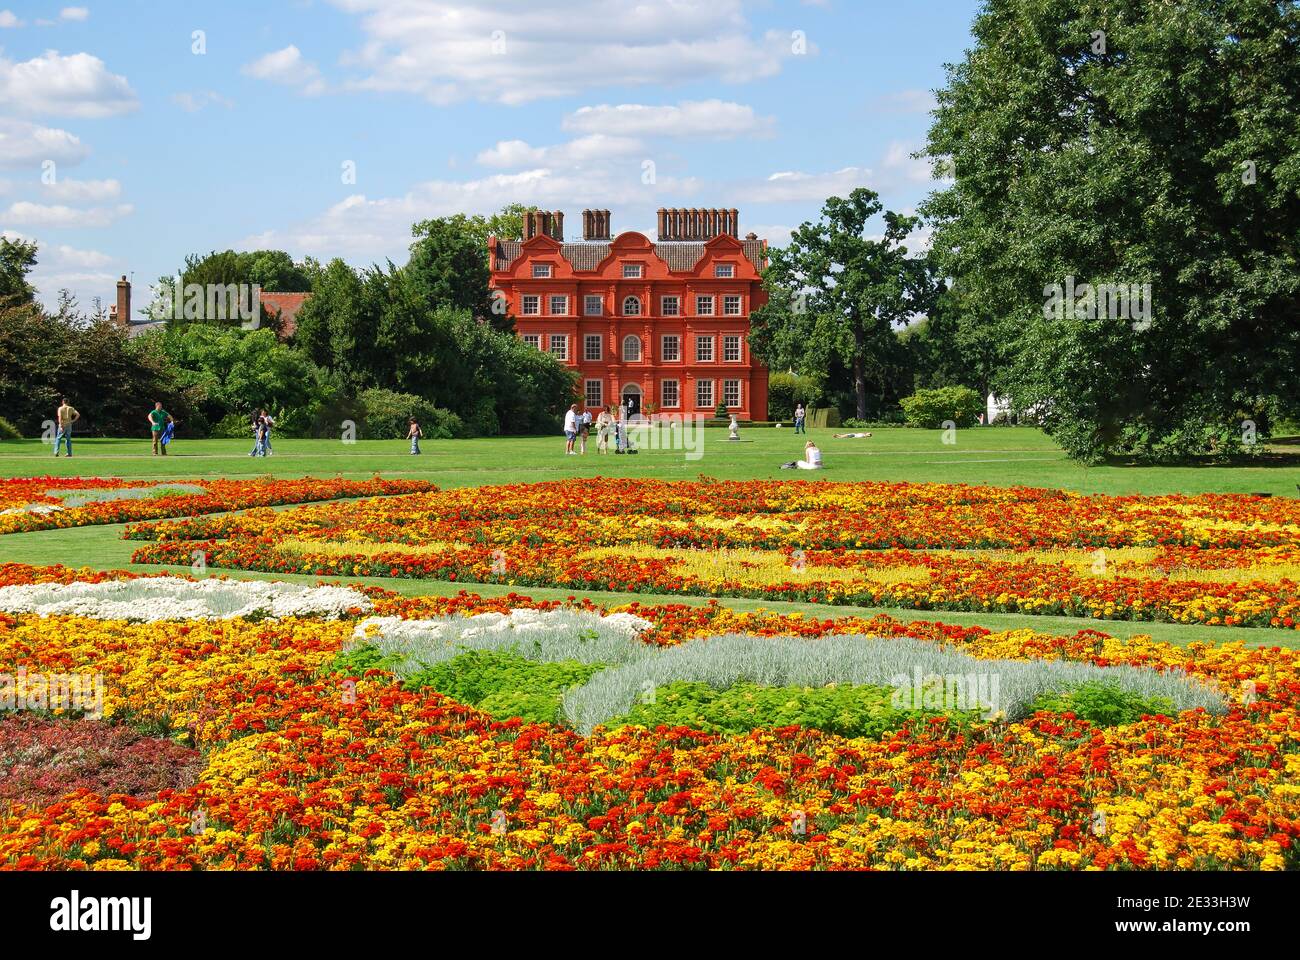 The Dutch House, Kew Palace, Royal Botanical Gardens, Kew, London Borough of Richmond upon Thames, Greater London, England, United Kingdom Stock Photo